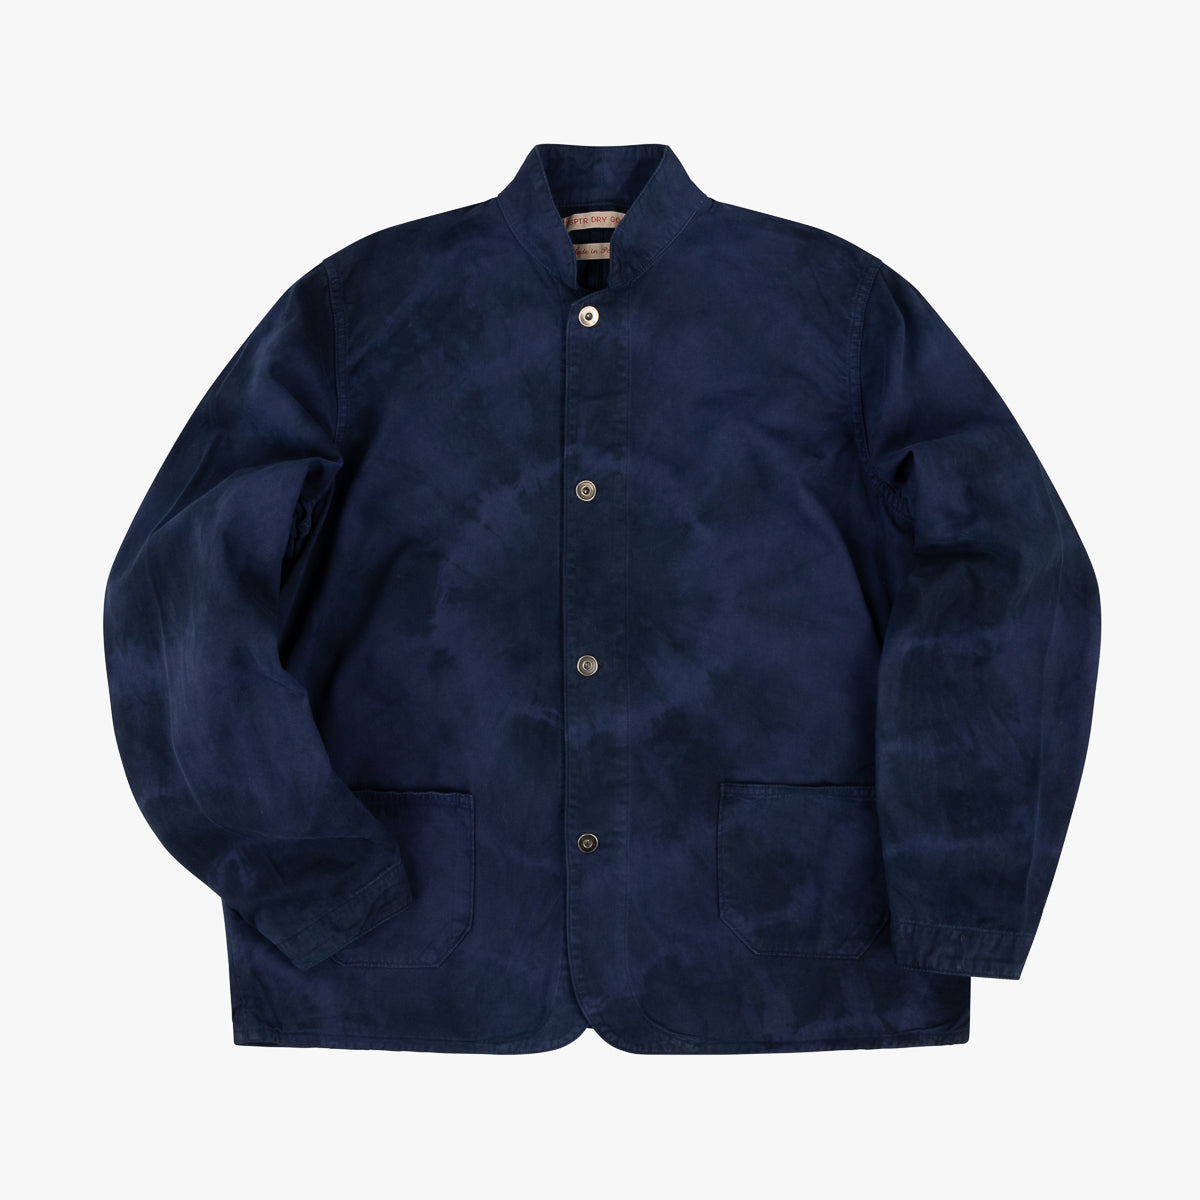 Chore jacket - Indigo Tie Dye